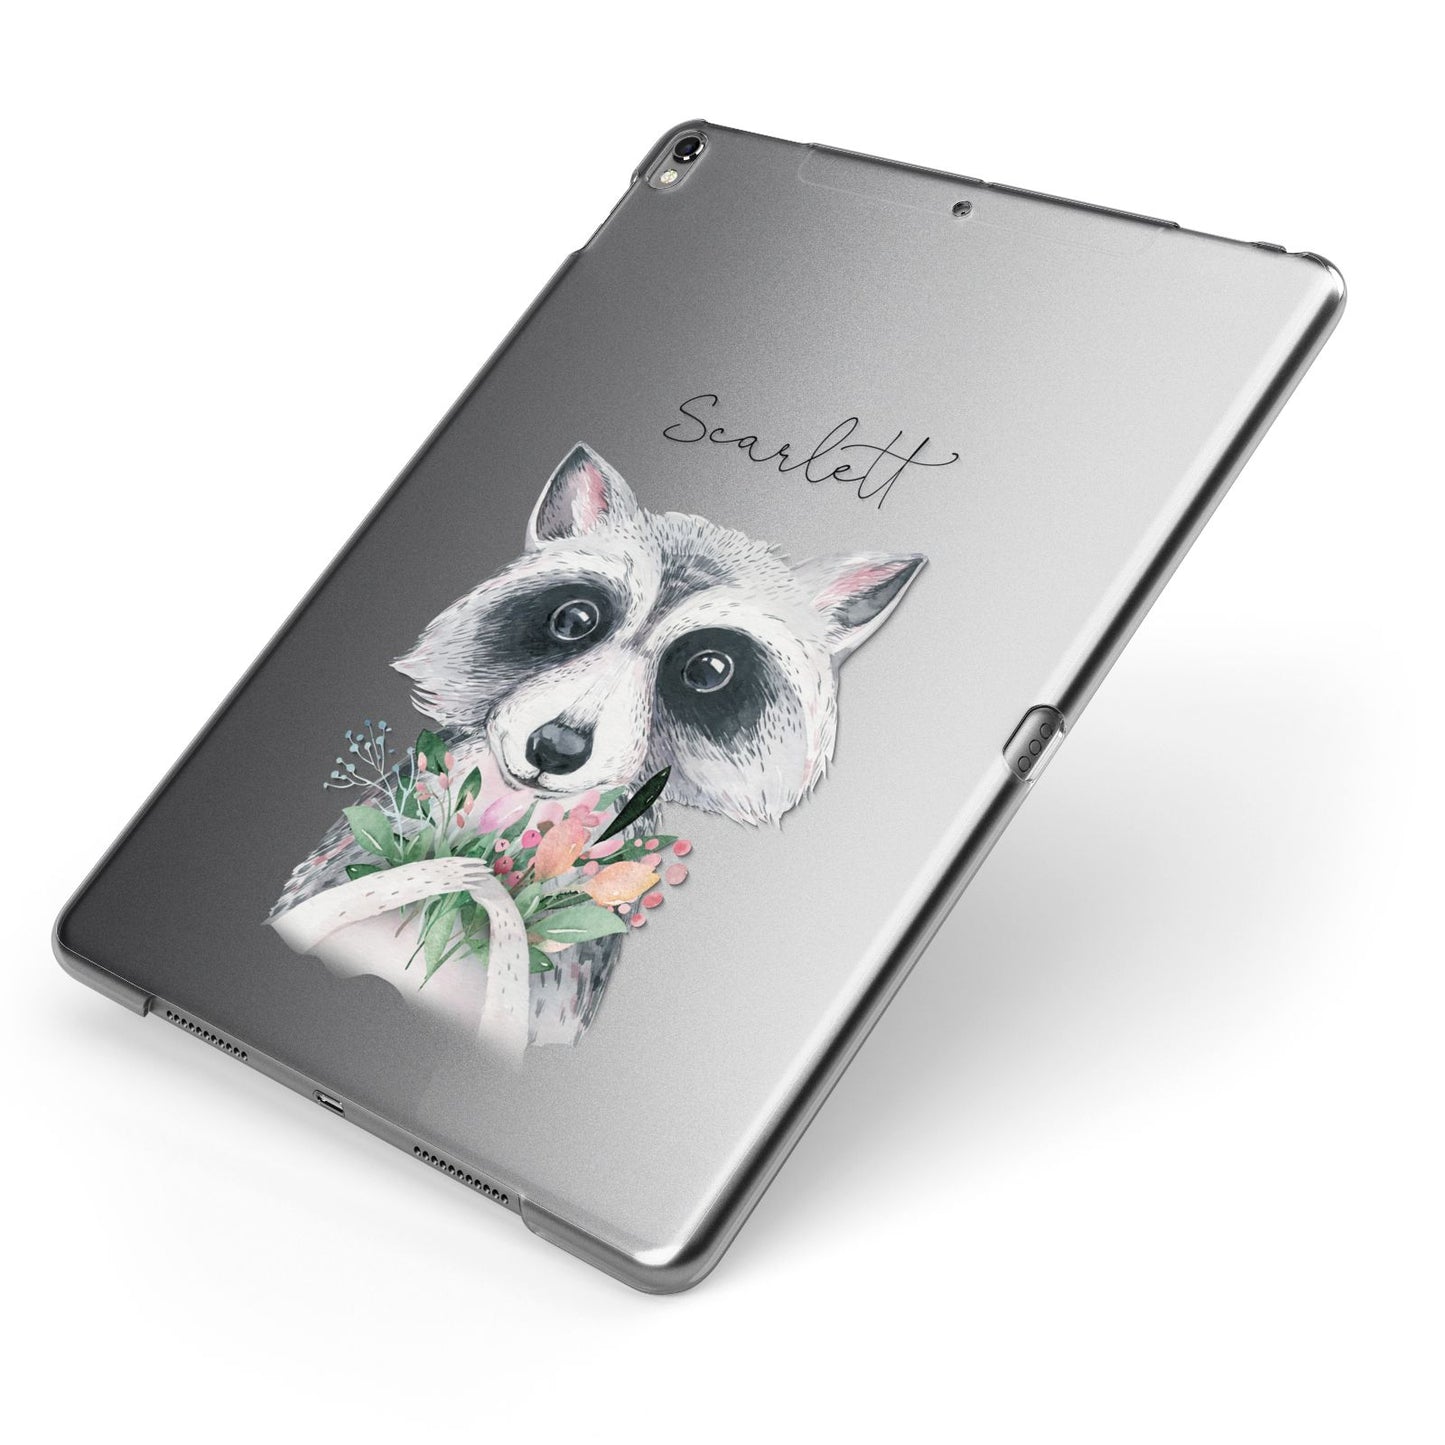 Personalised Raccoon Apple iPad Case on Grey iPad Side View